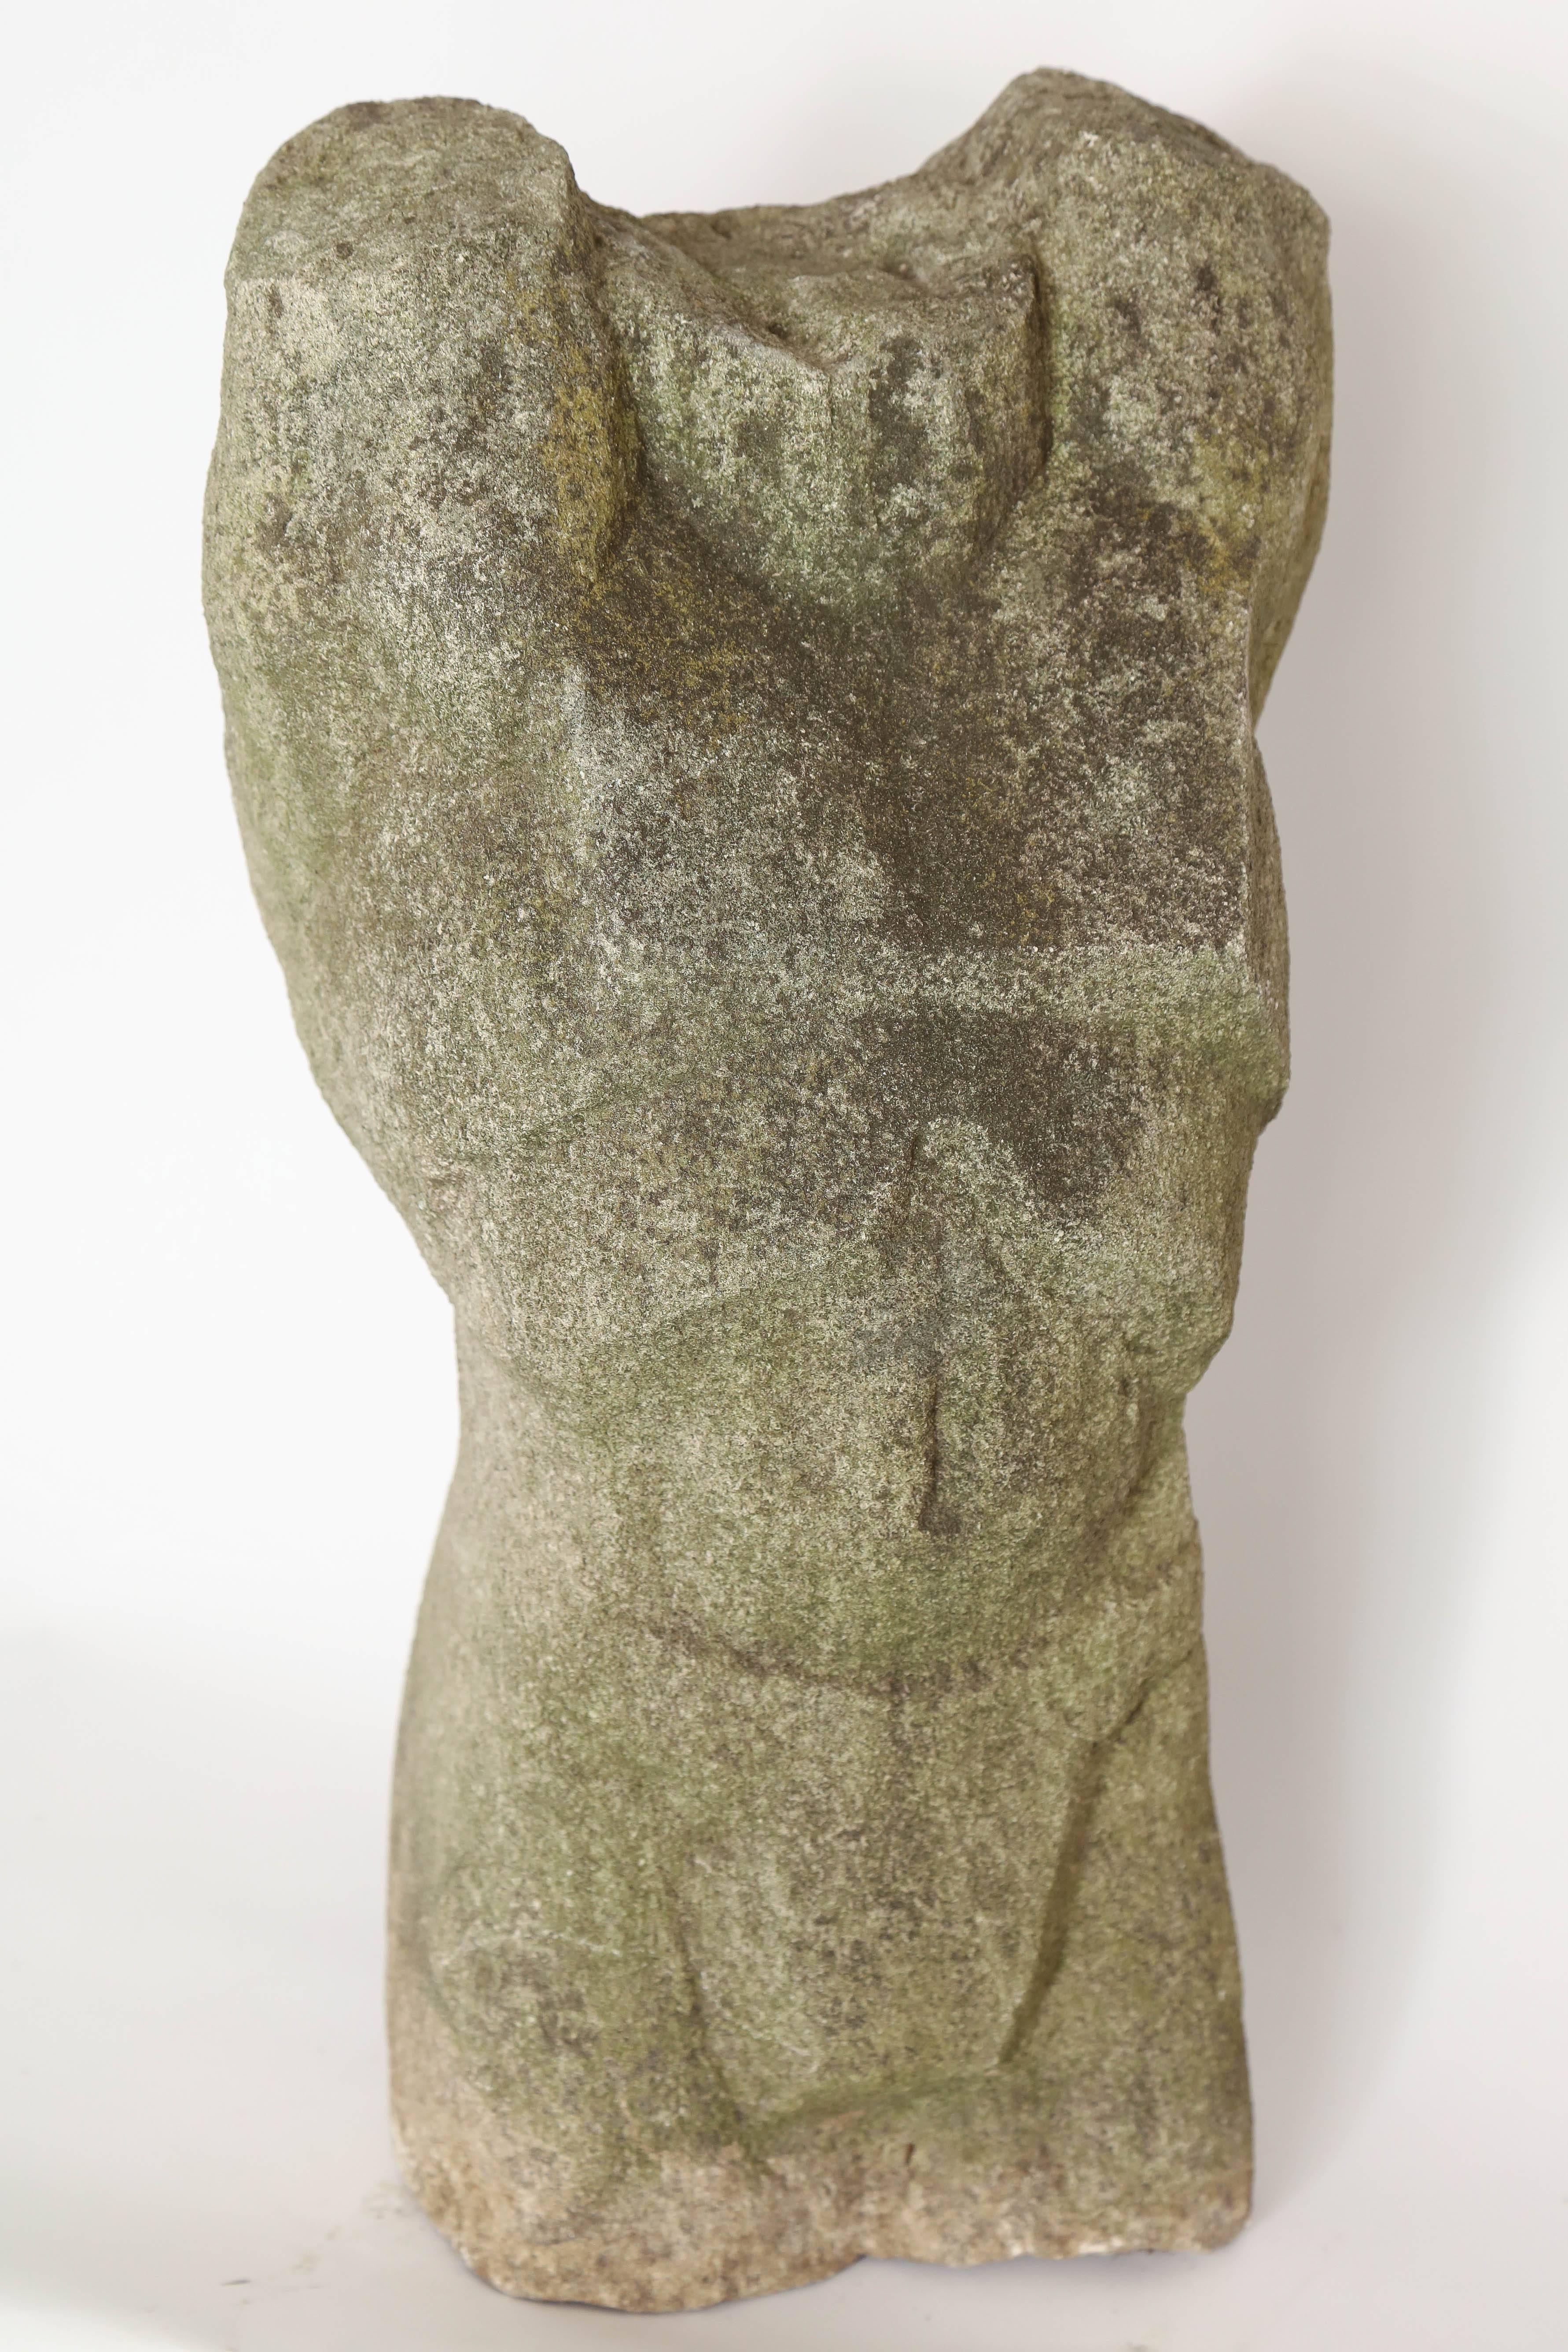 Carved stone torso sculpture.